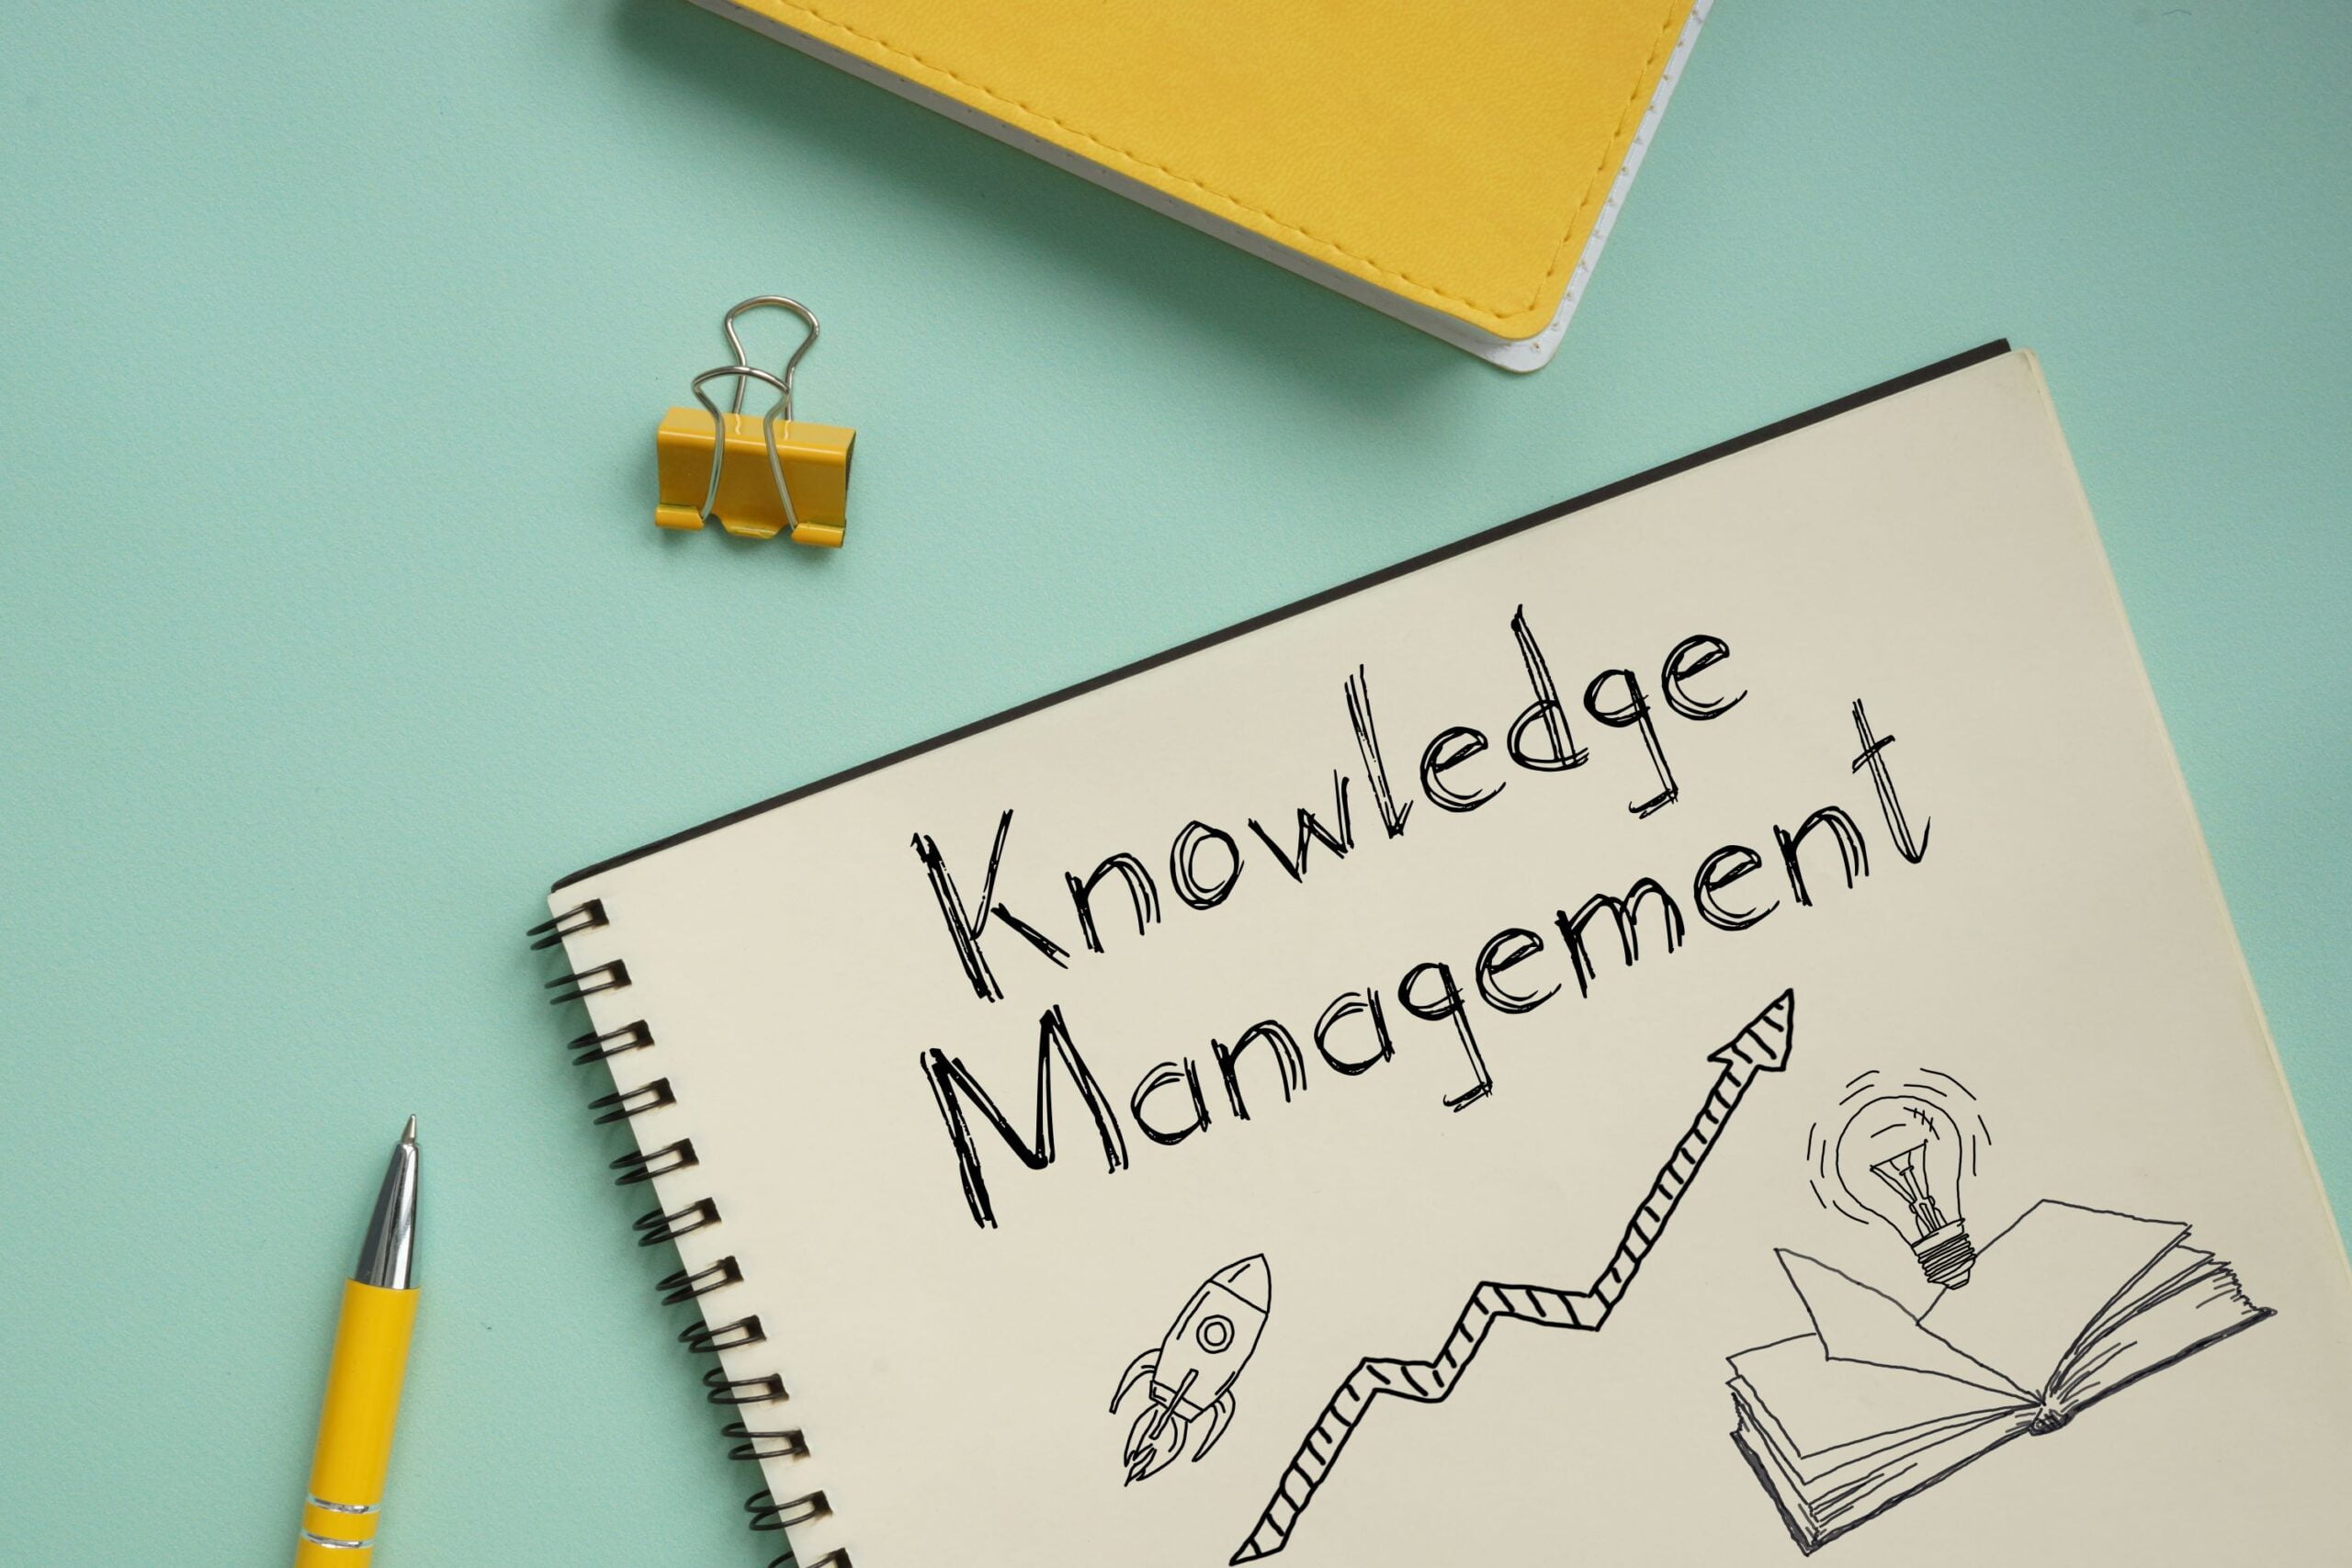 Knowledge Management-1